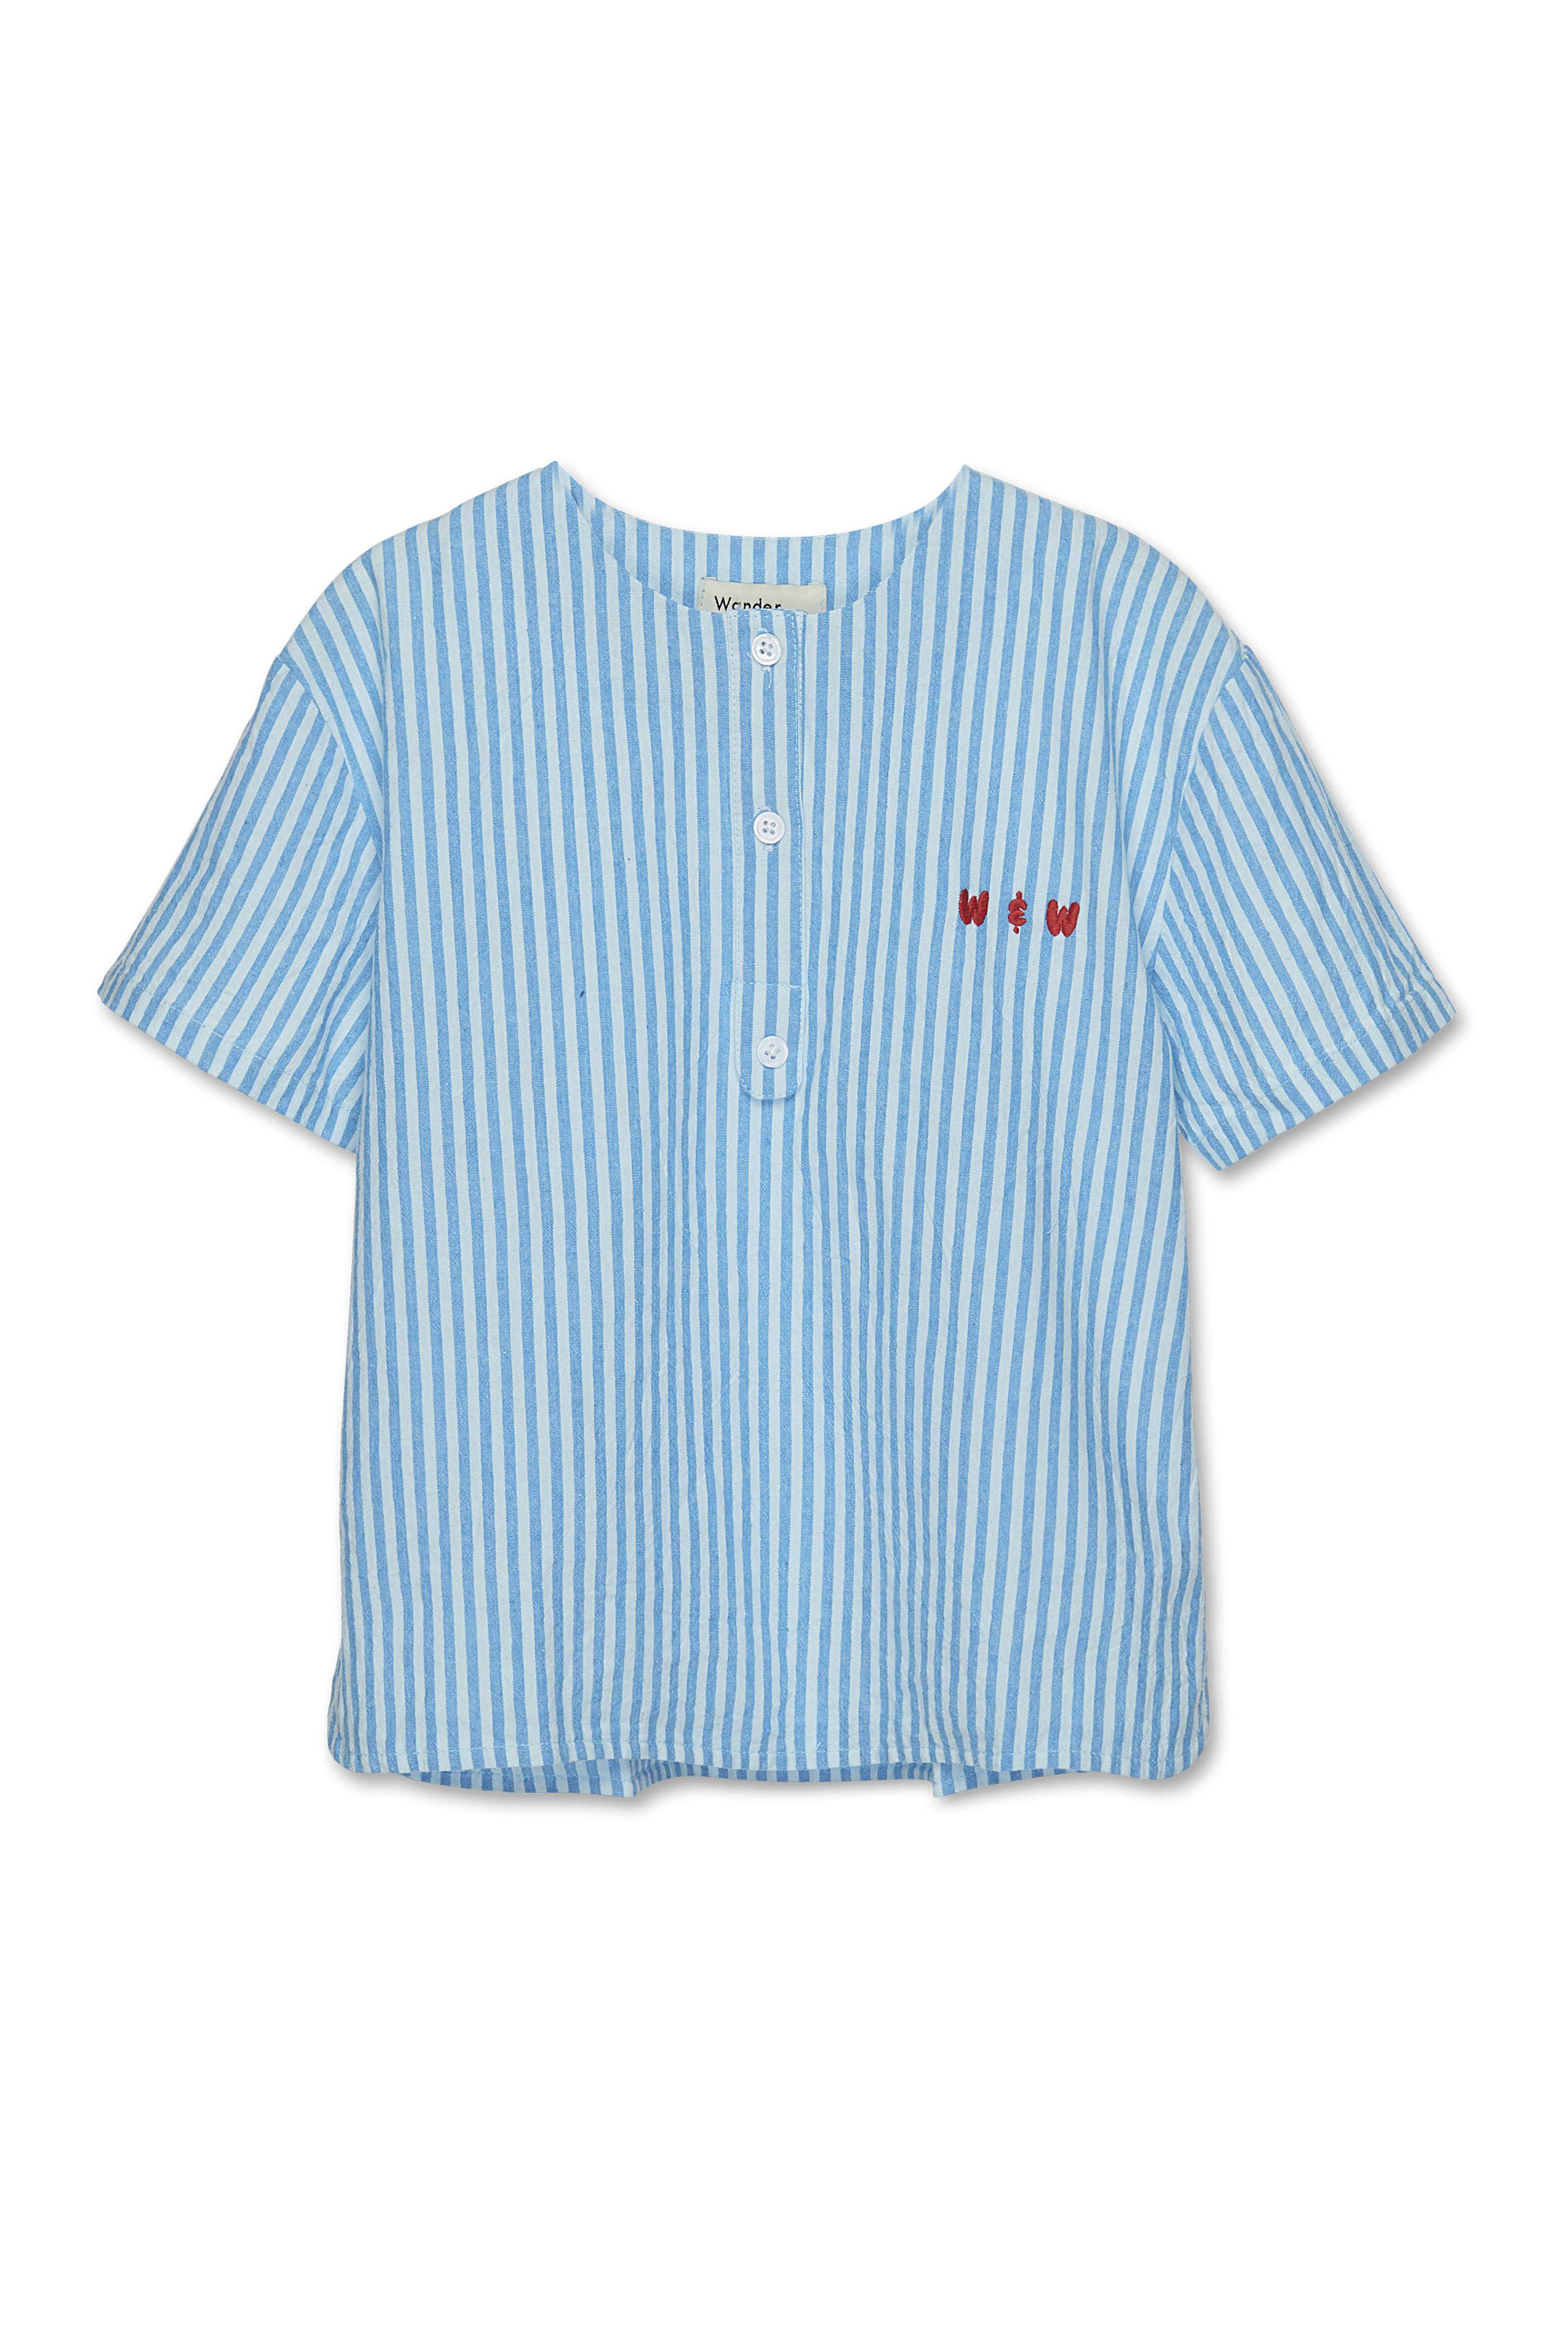 Wander and Wonder - henley shirt - aqua stripe